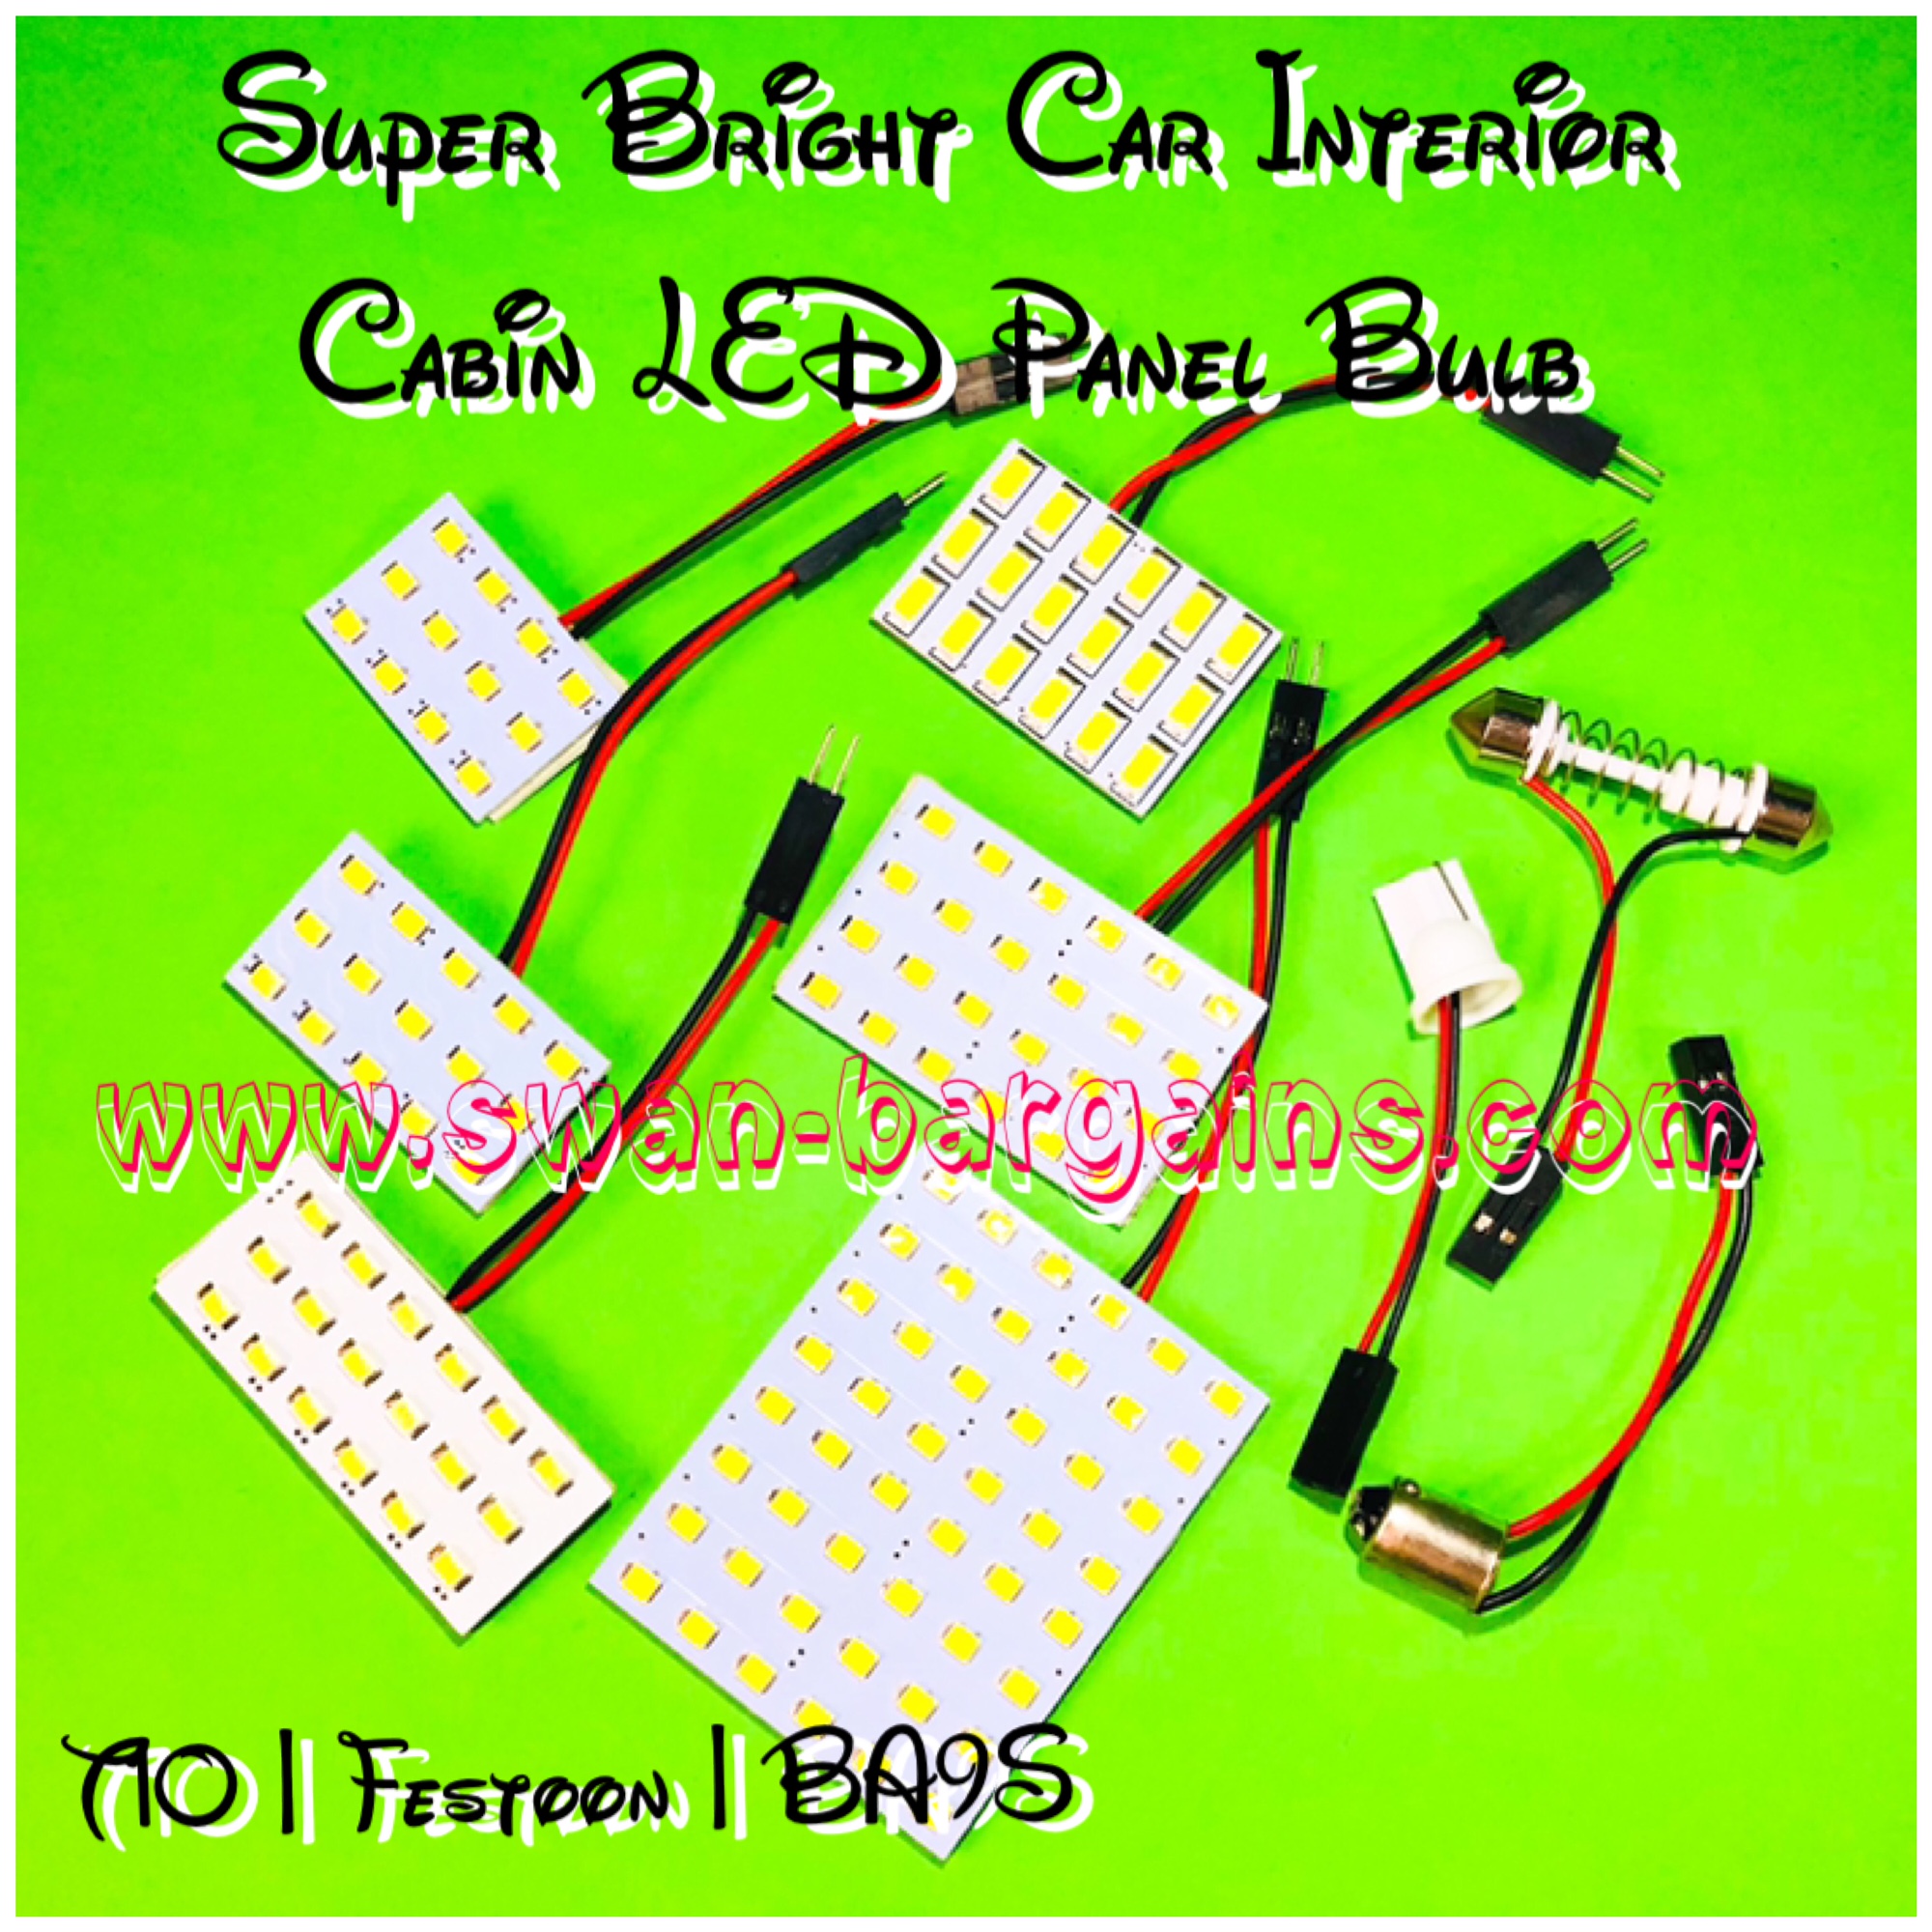 T10 Festoon BA9S Super Bright Interior Cabin LED Panel Bulb Singapore